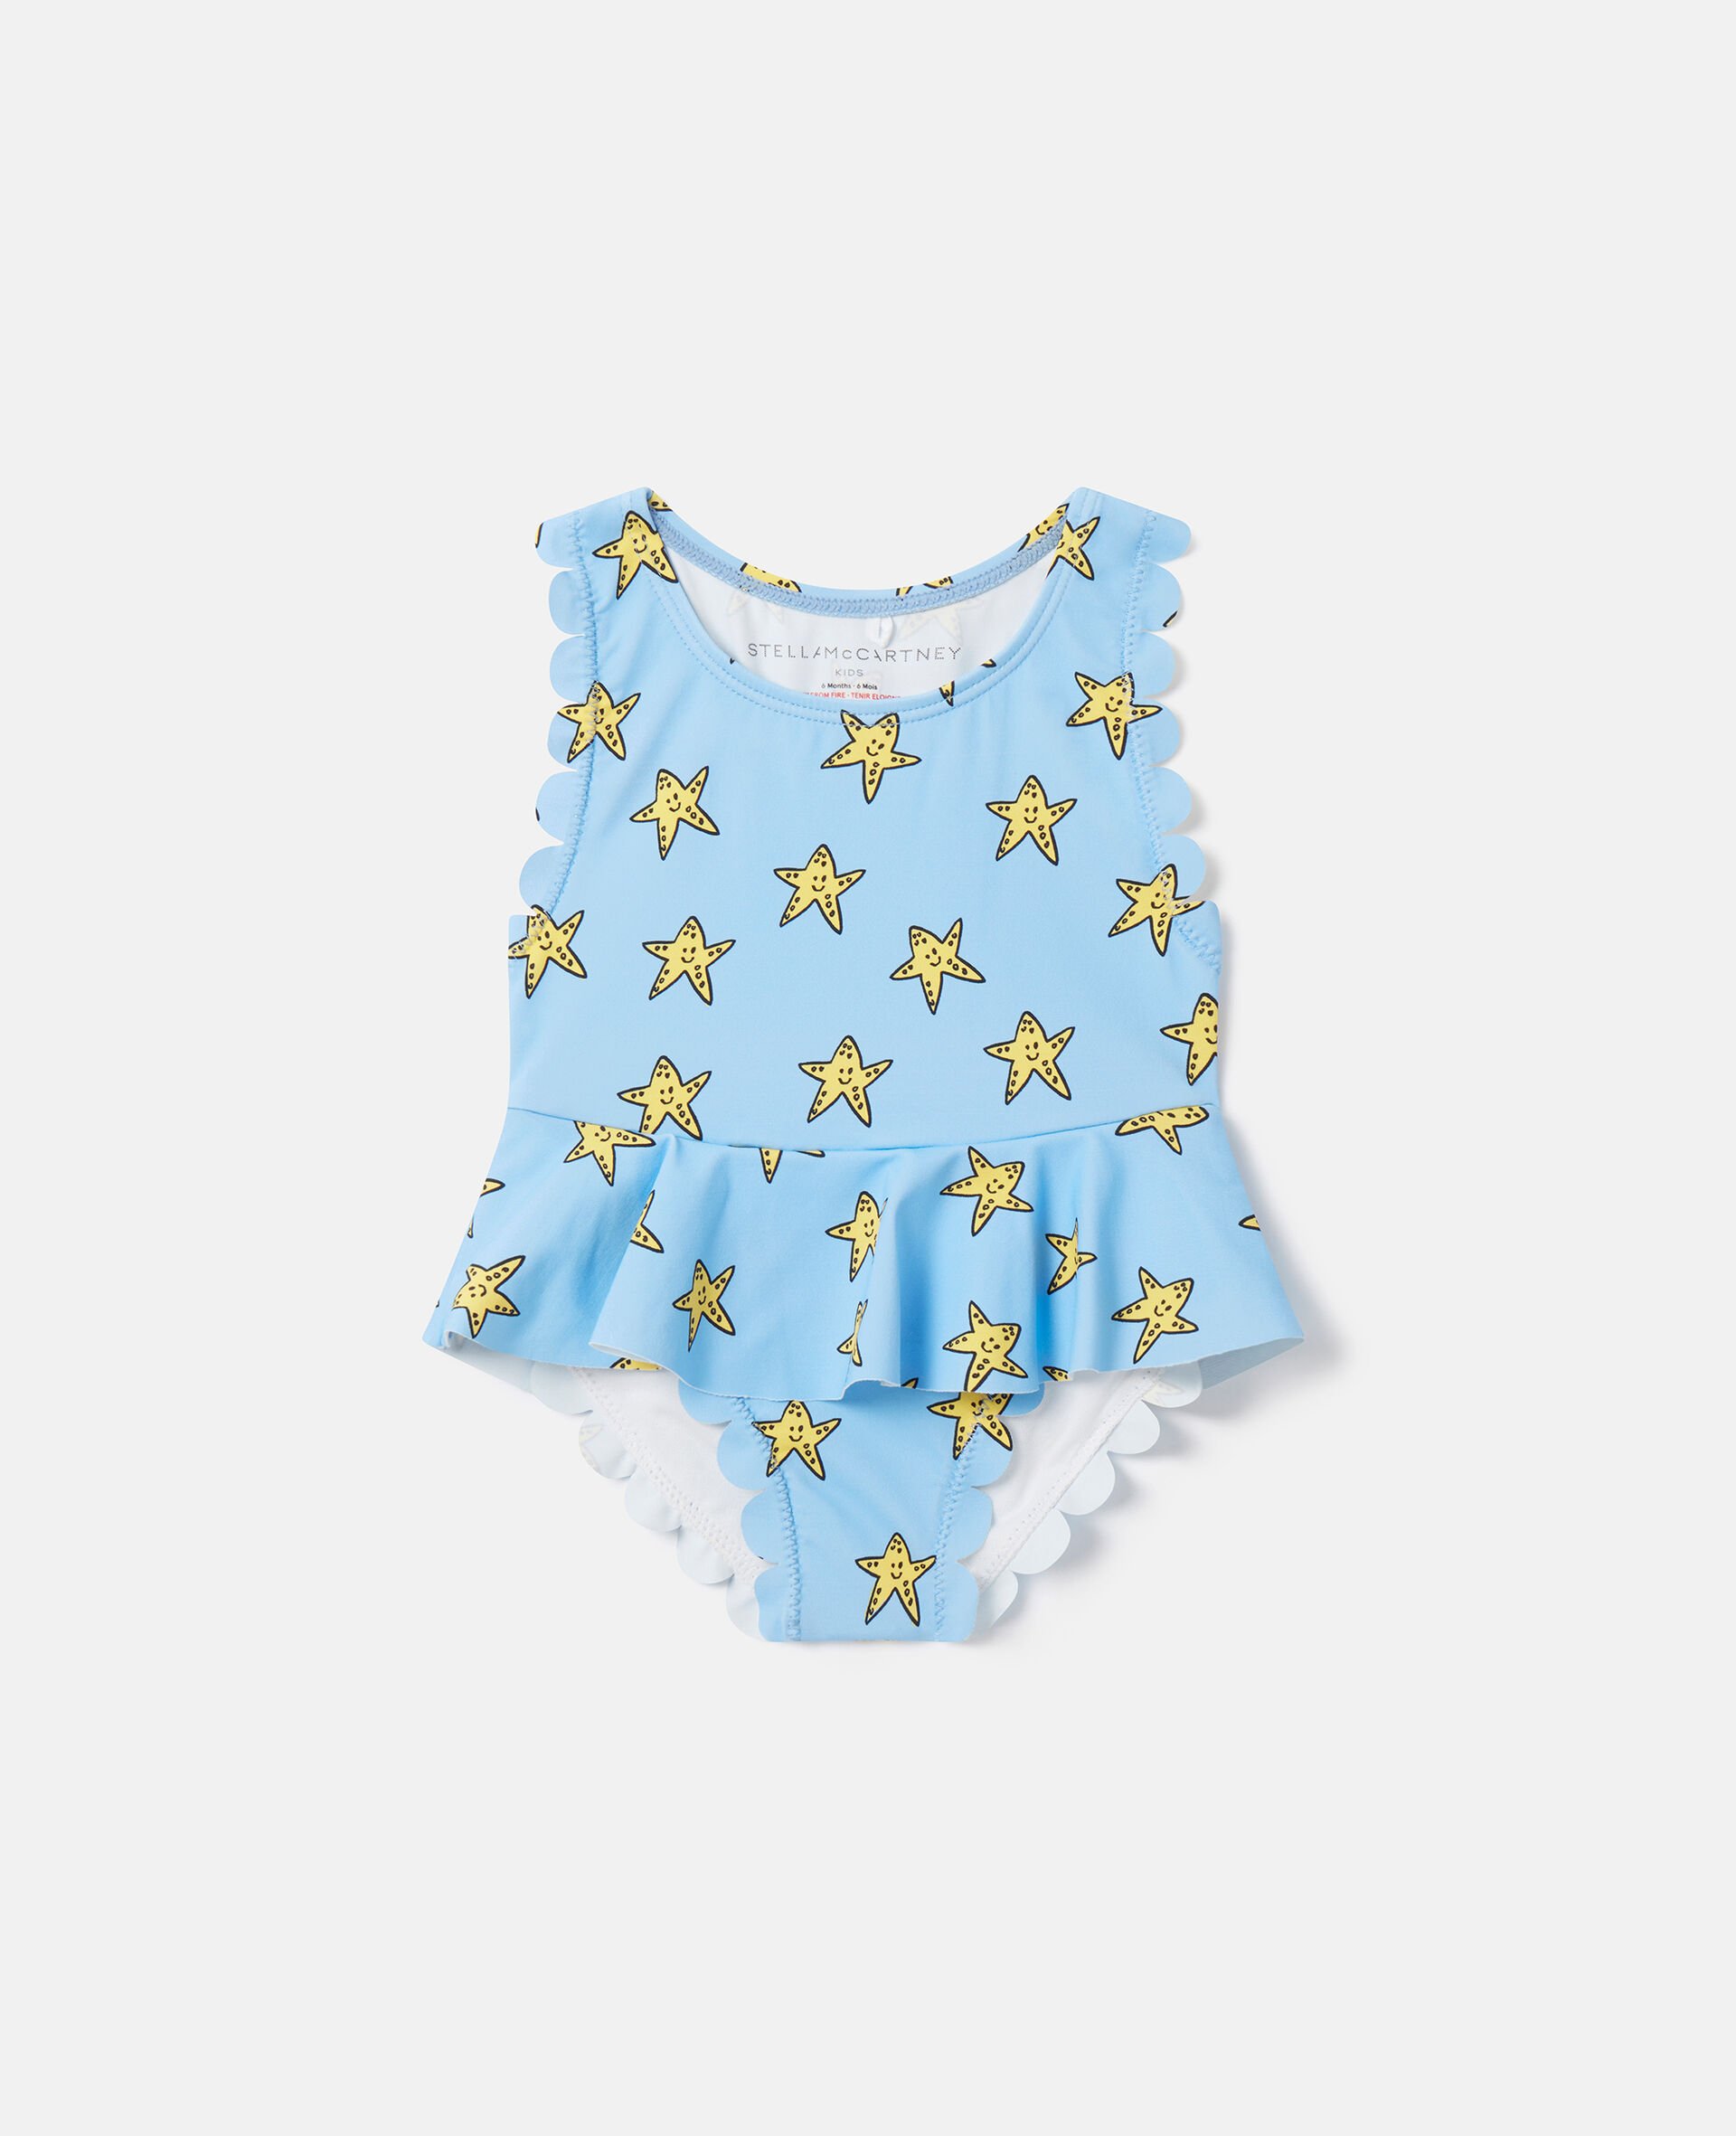 Smiling Stella Star Print Swimsuit-Bleu-large image number 0